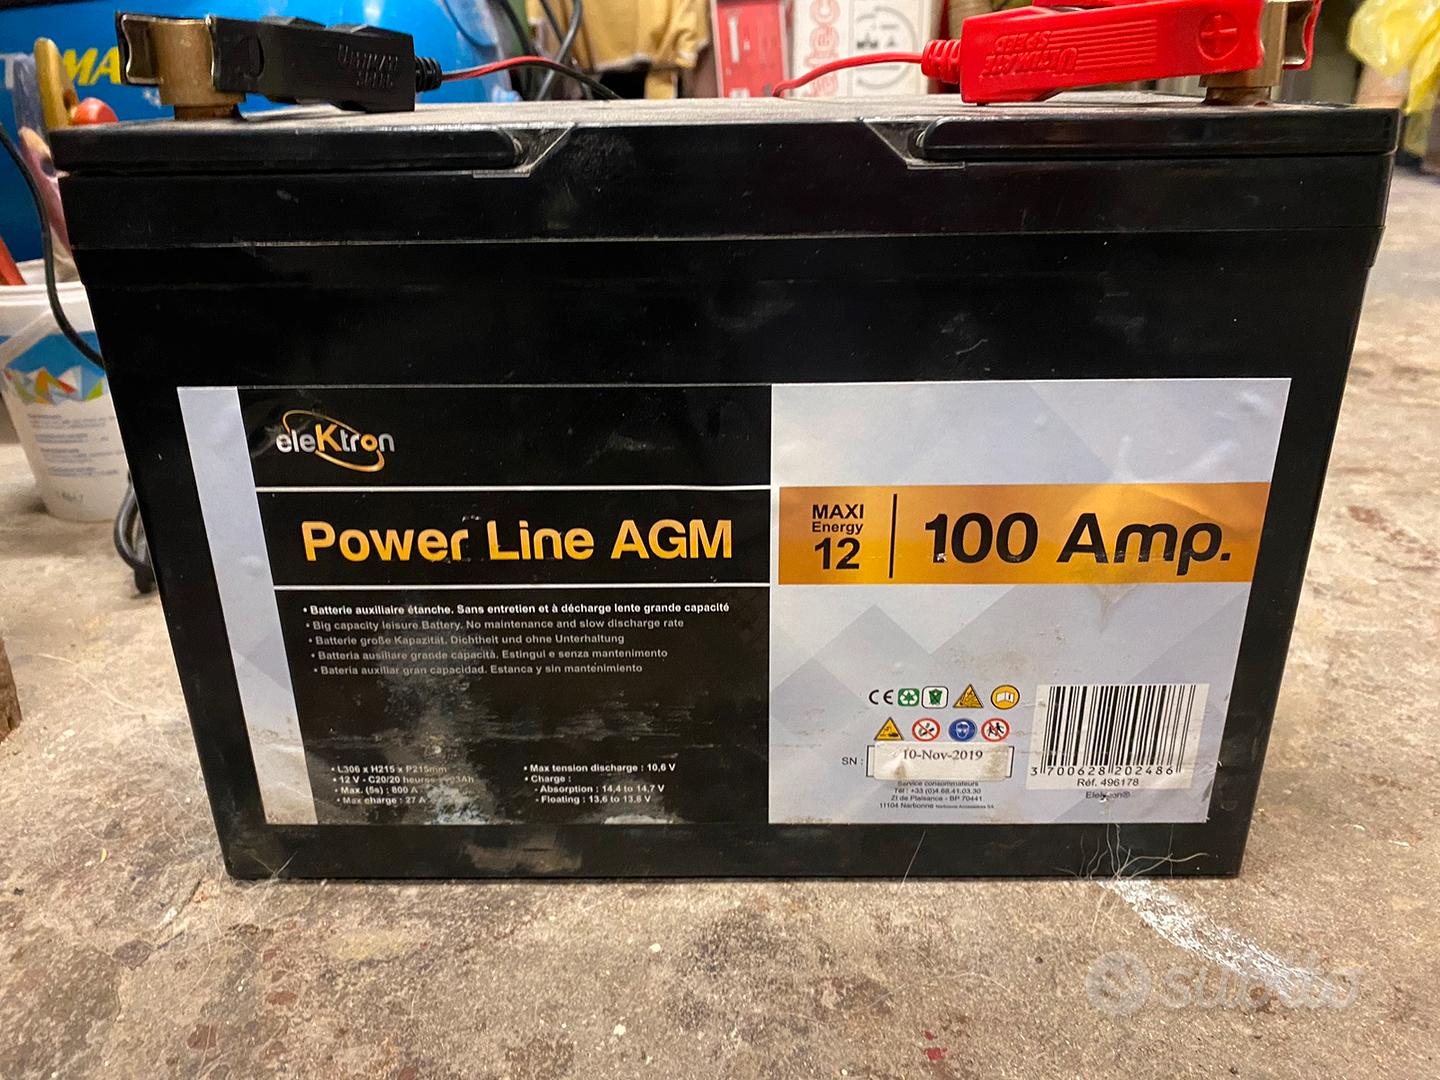 Bateria Auxiliar AGM 100A Power Line Elektron